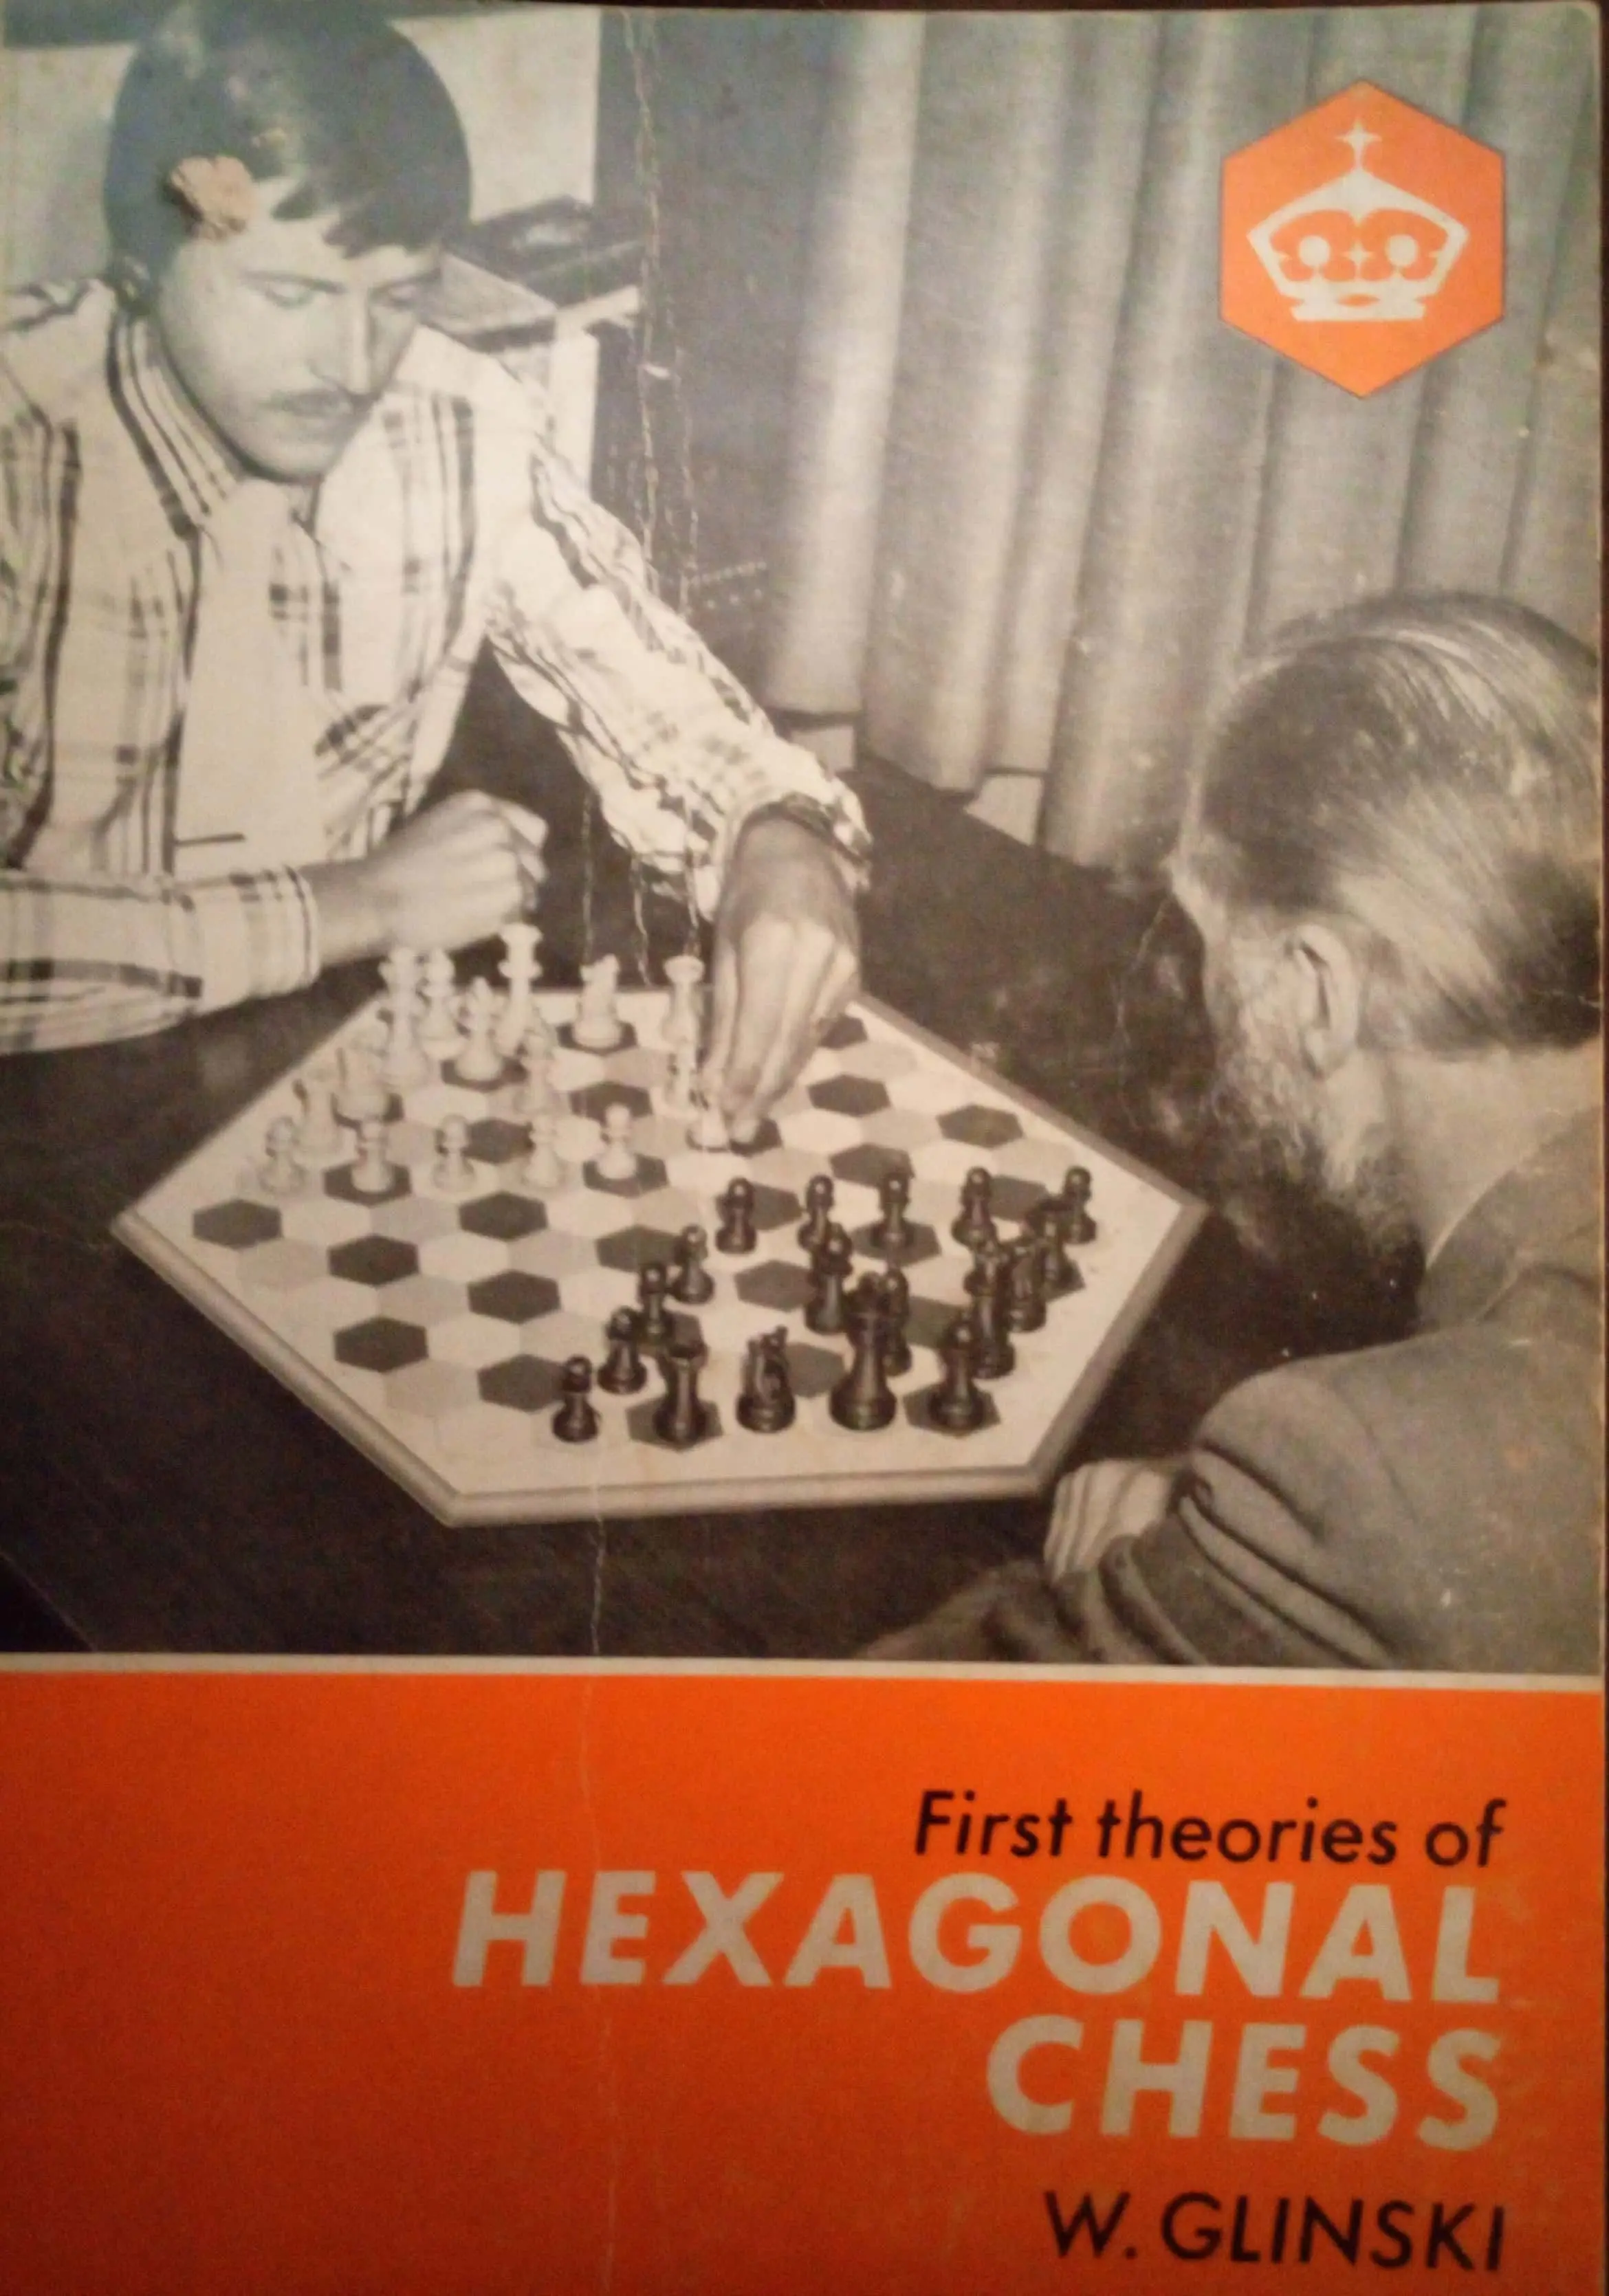 'First theories of Hexagonal Chess' (1974)